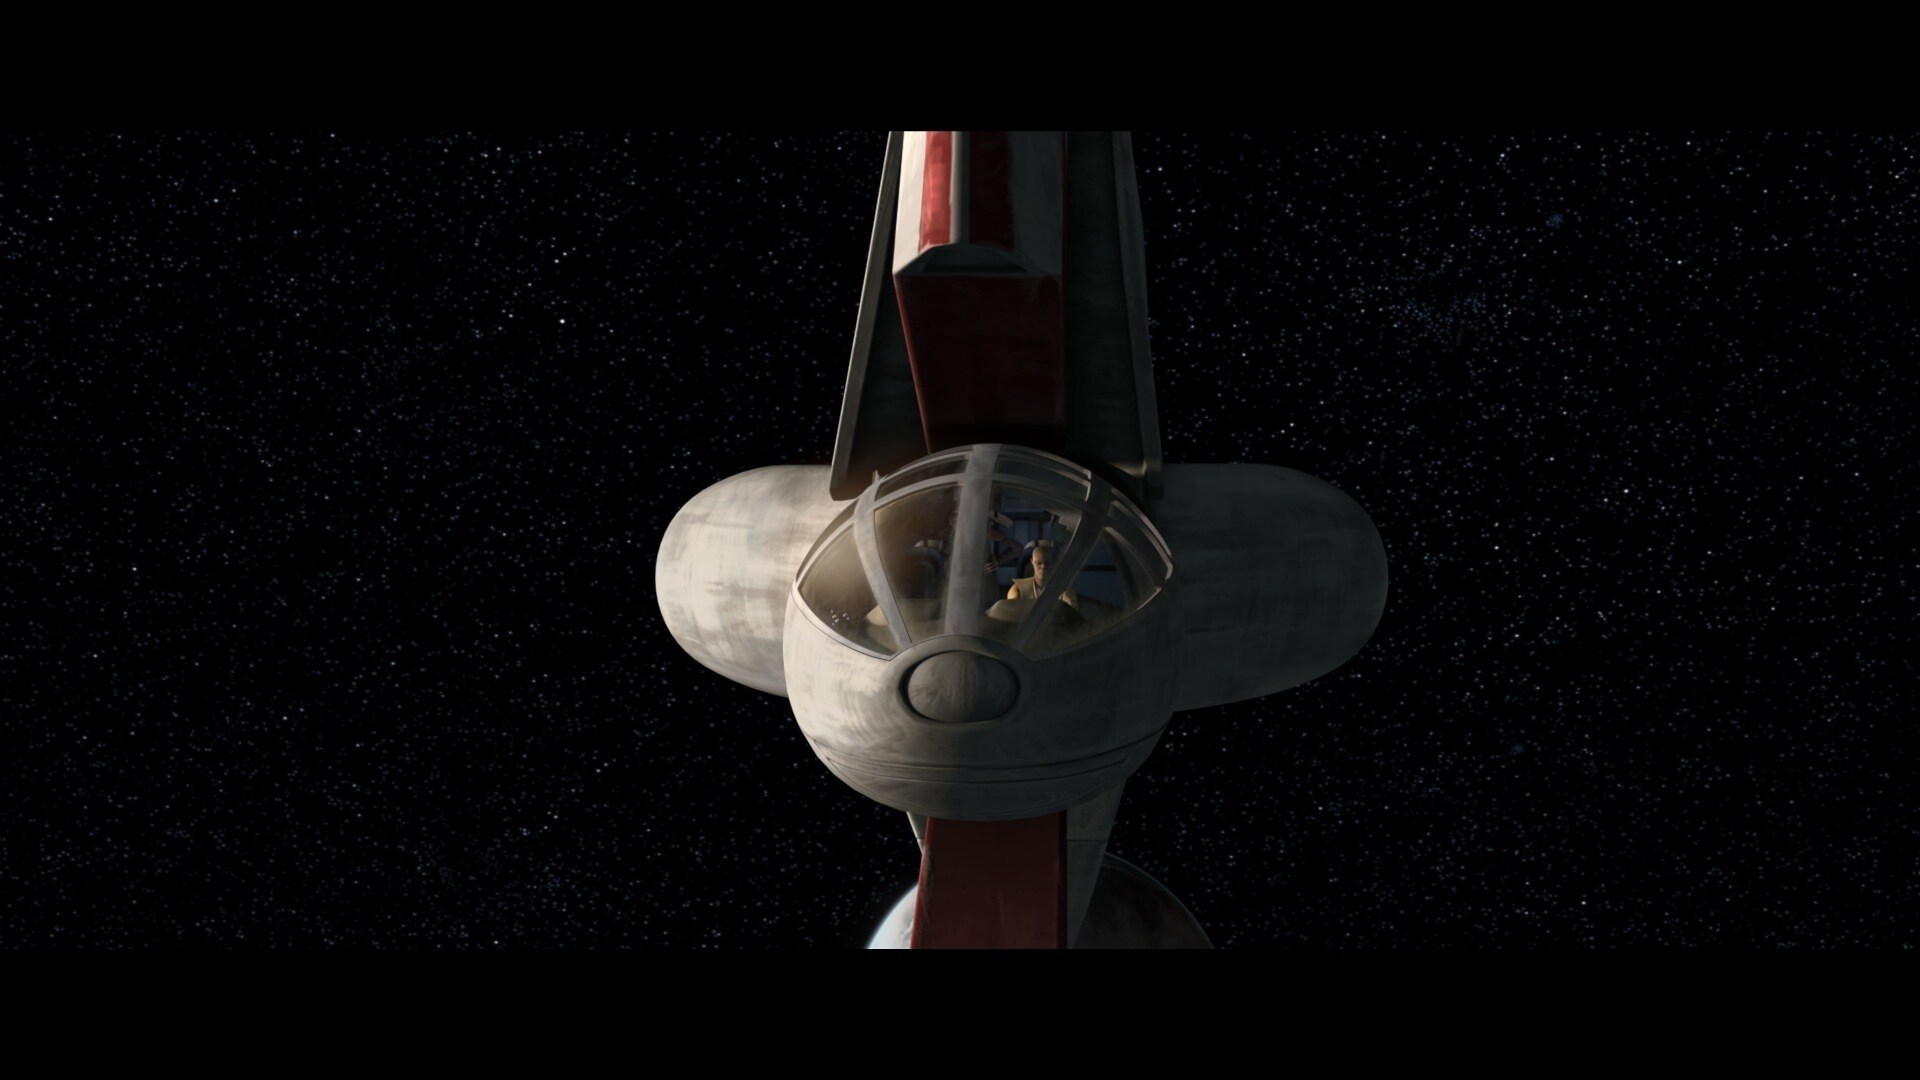 Mace Windu and Jar Jar Binks depart Bardotta in a Jedi shuttle. Jar Jar describes to Mace the Fra...